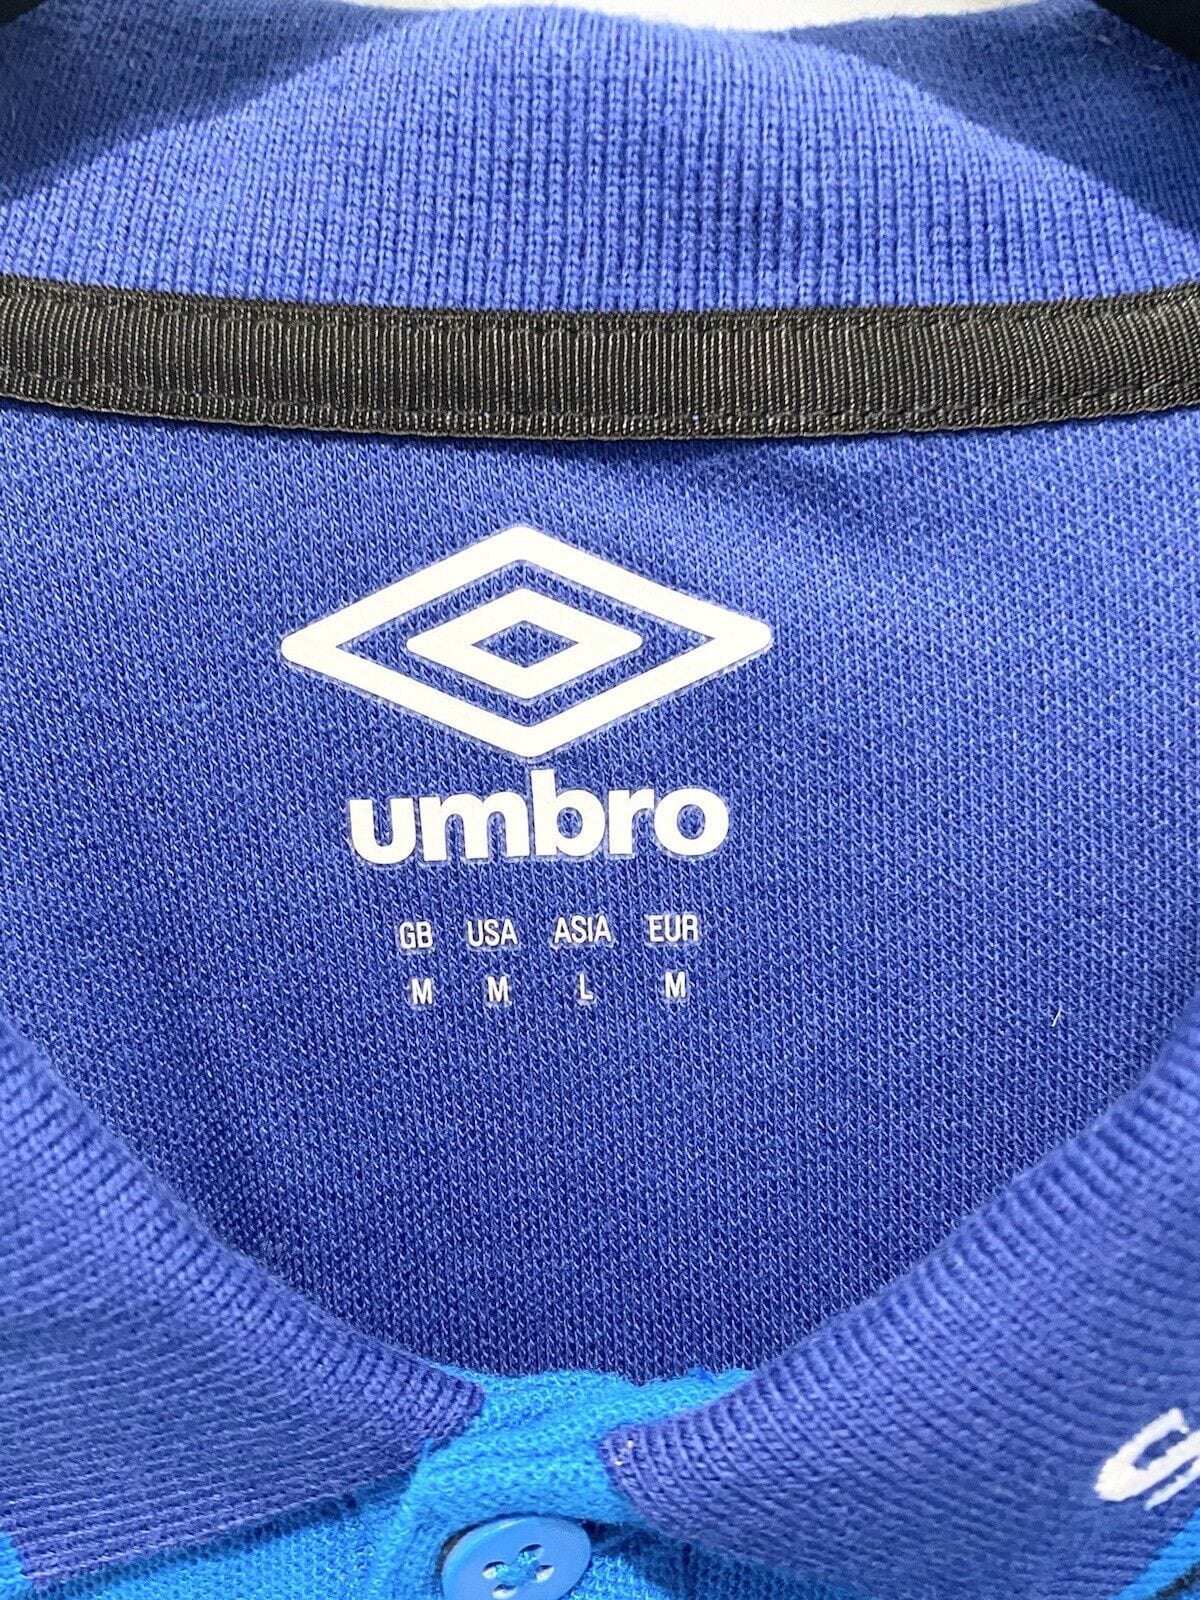 2019/20 EVERTON Vintage Umbro Training Football Polo T Shirt (M)